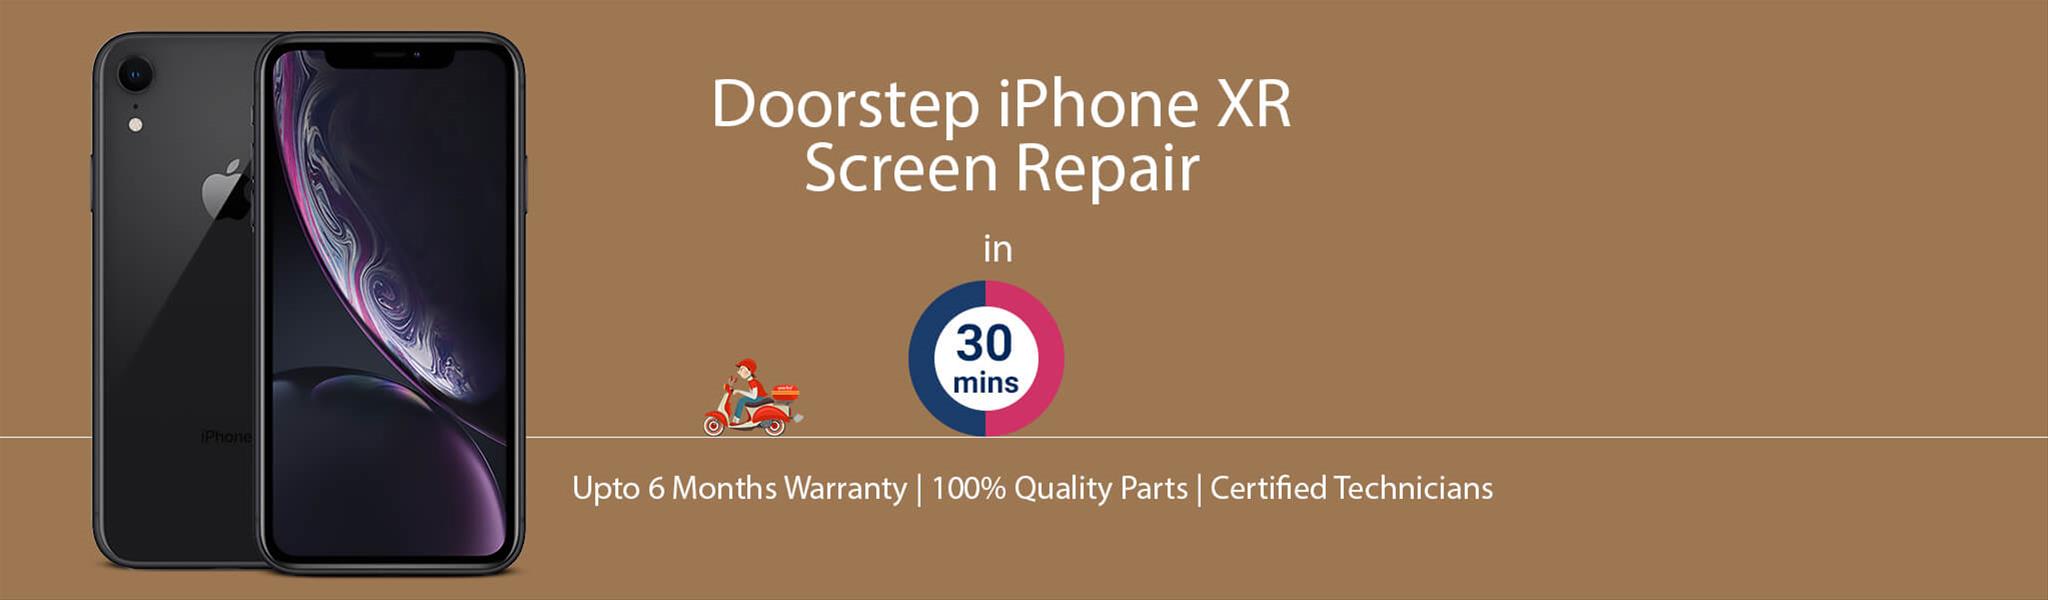 iphone-xr-screen-repair.jpg